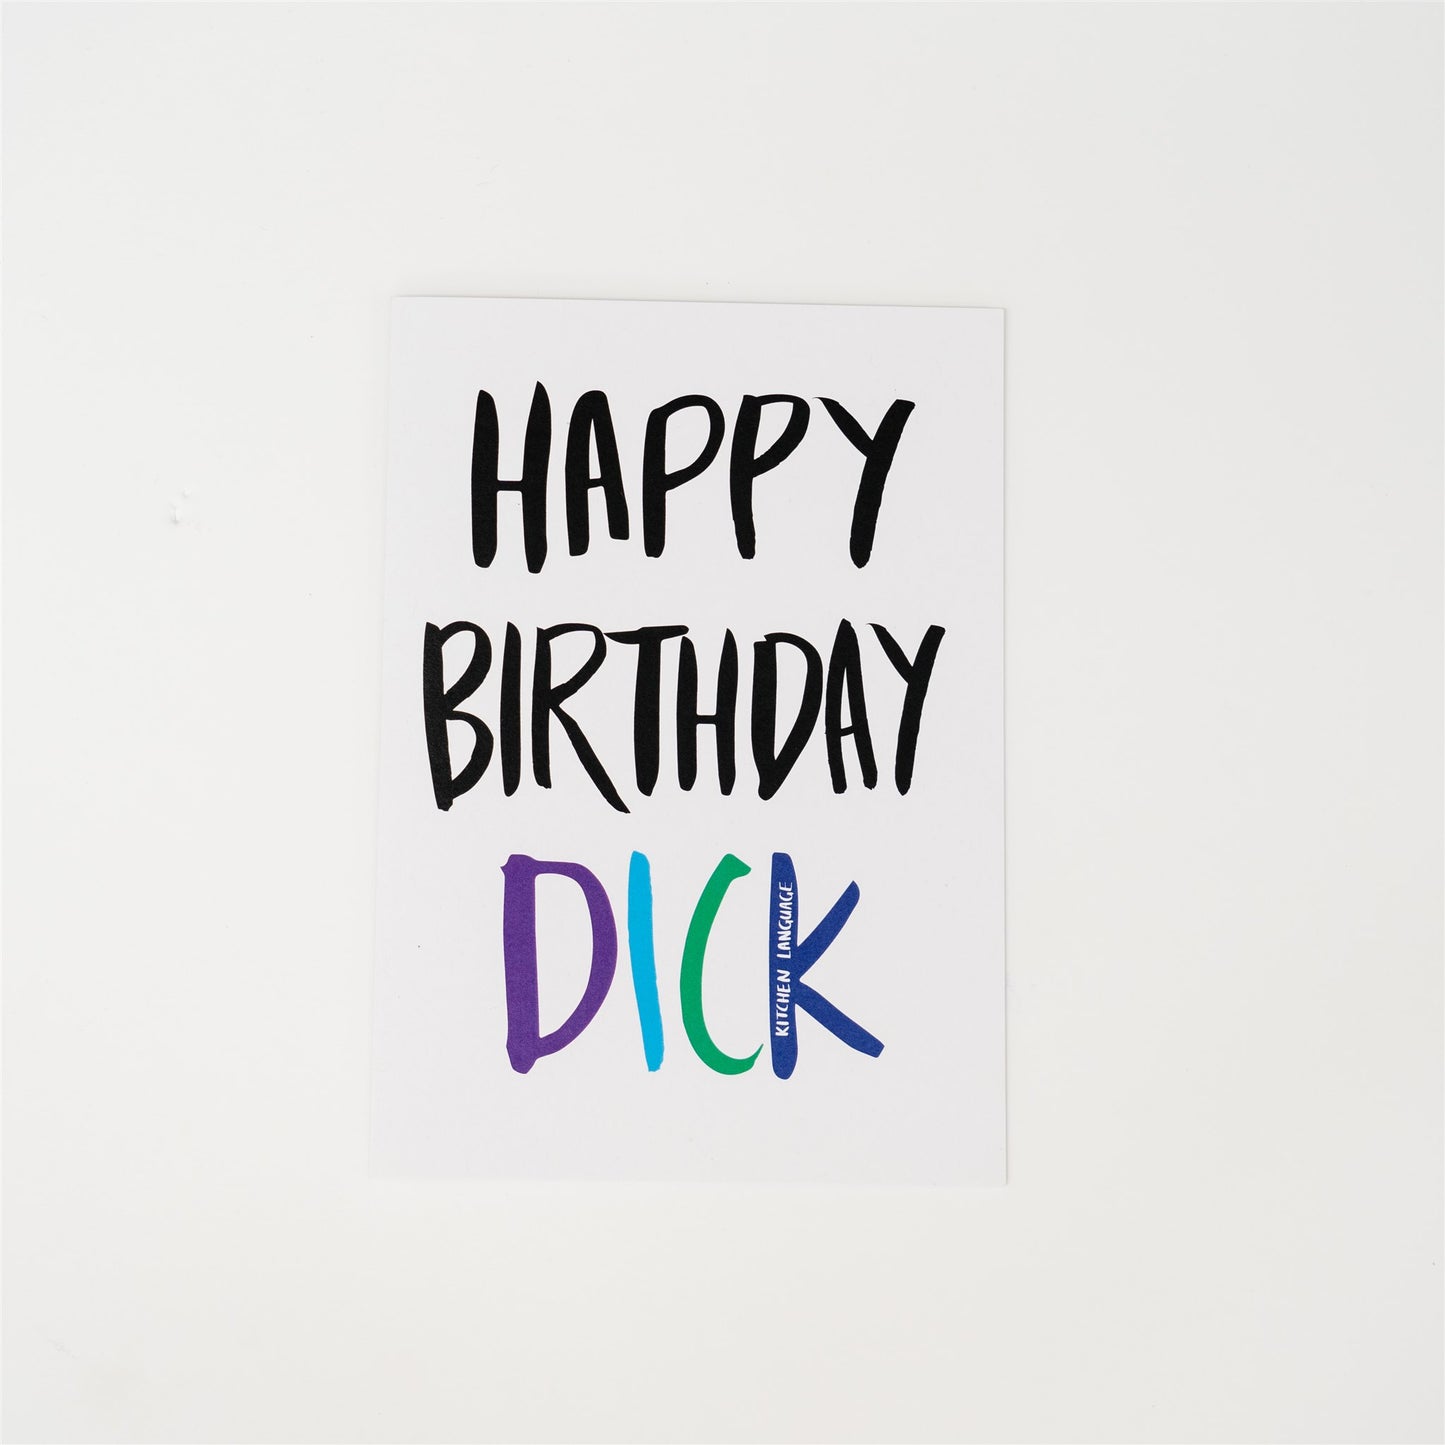 Happy Birthday Dick- greeting card- kitchen language